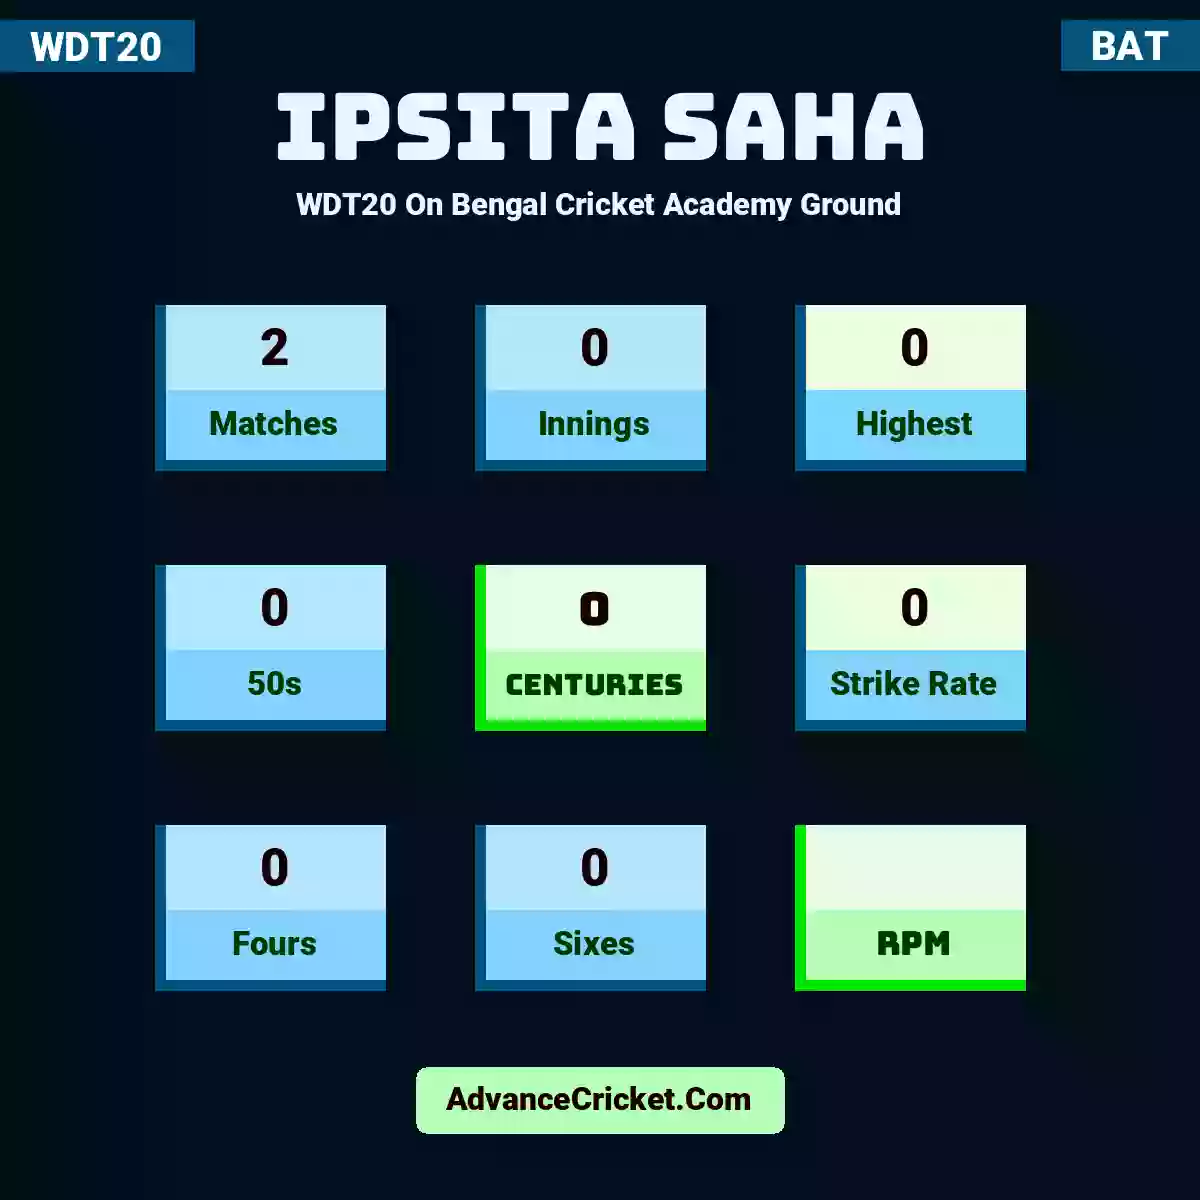 Ipsita Saha WDT20  On Bengal Cricket Academy Ground, Ipsita Saha played 2 matches, scored 0 runs as highest, 0 half-centuries, and 0 centuries, with a strike rate of 0. I.Saha hit 0 fours and 0 sixes.